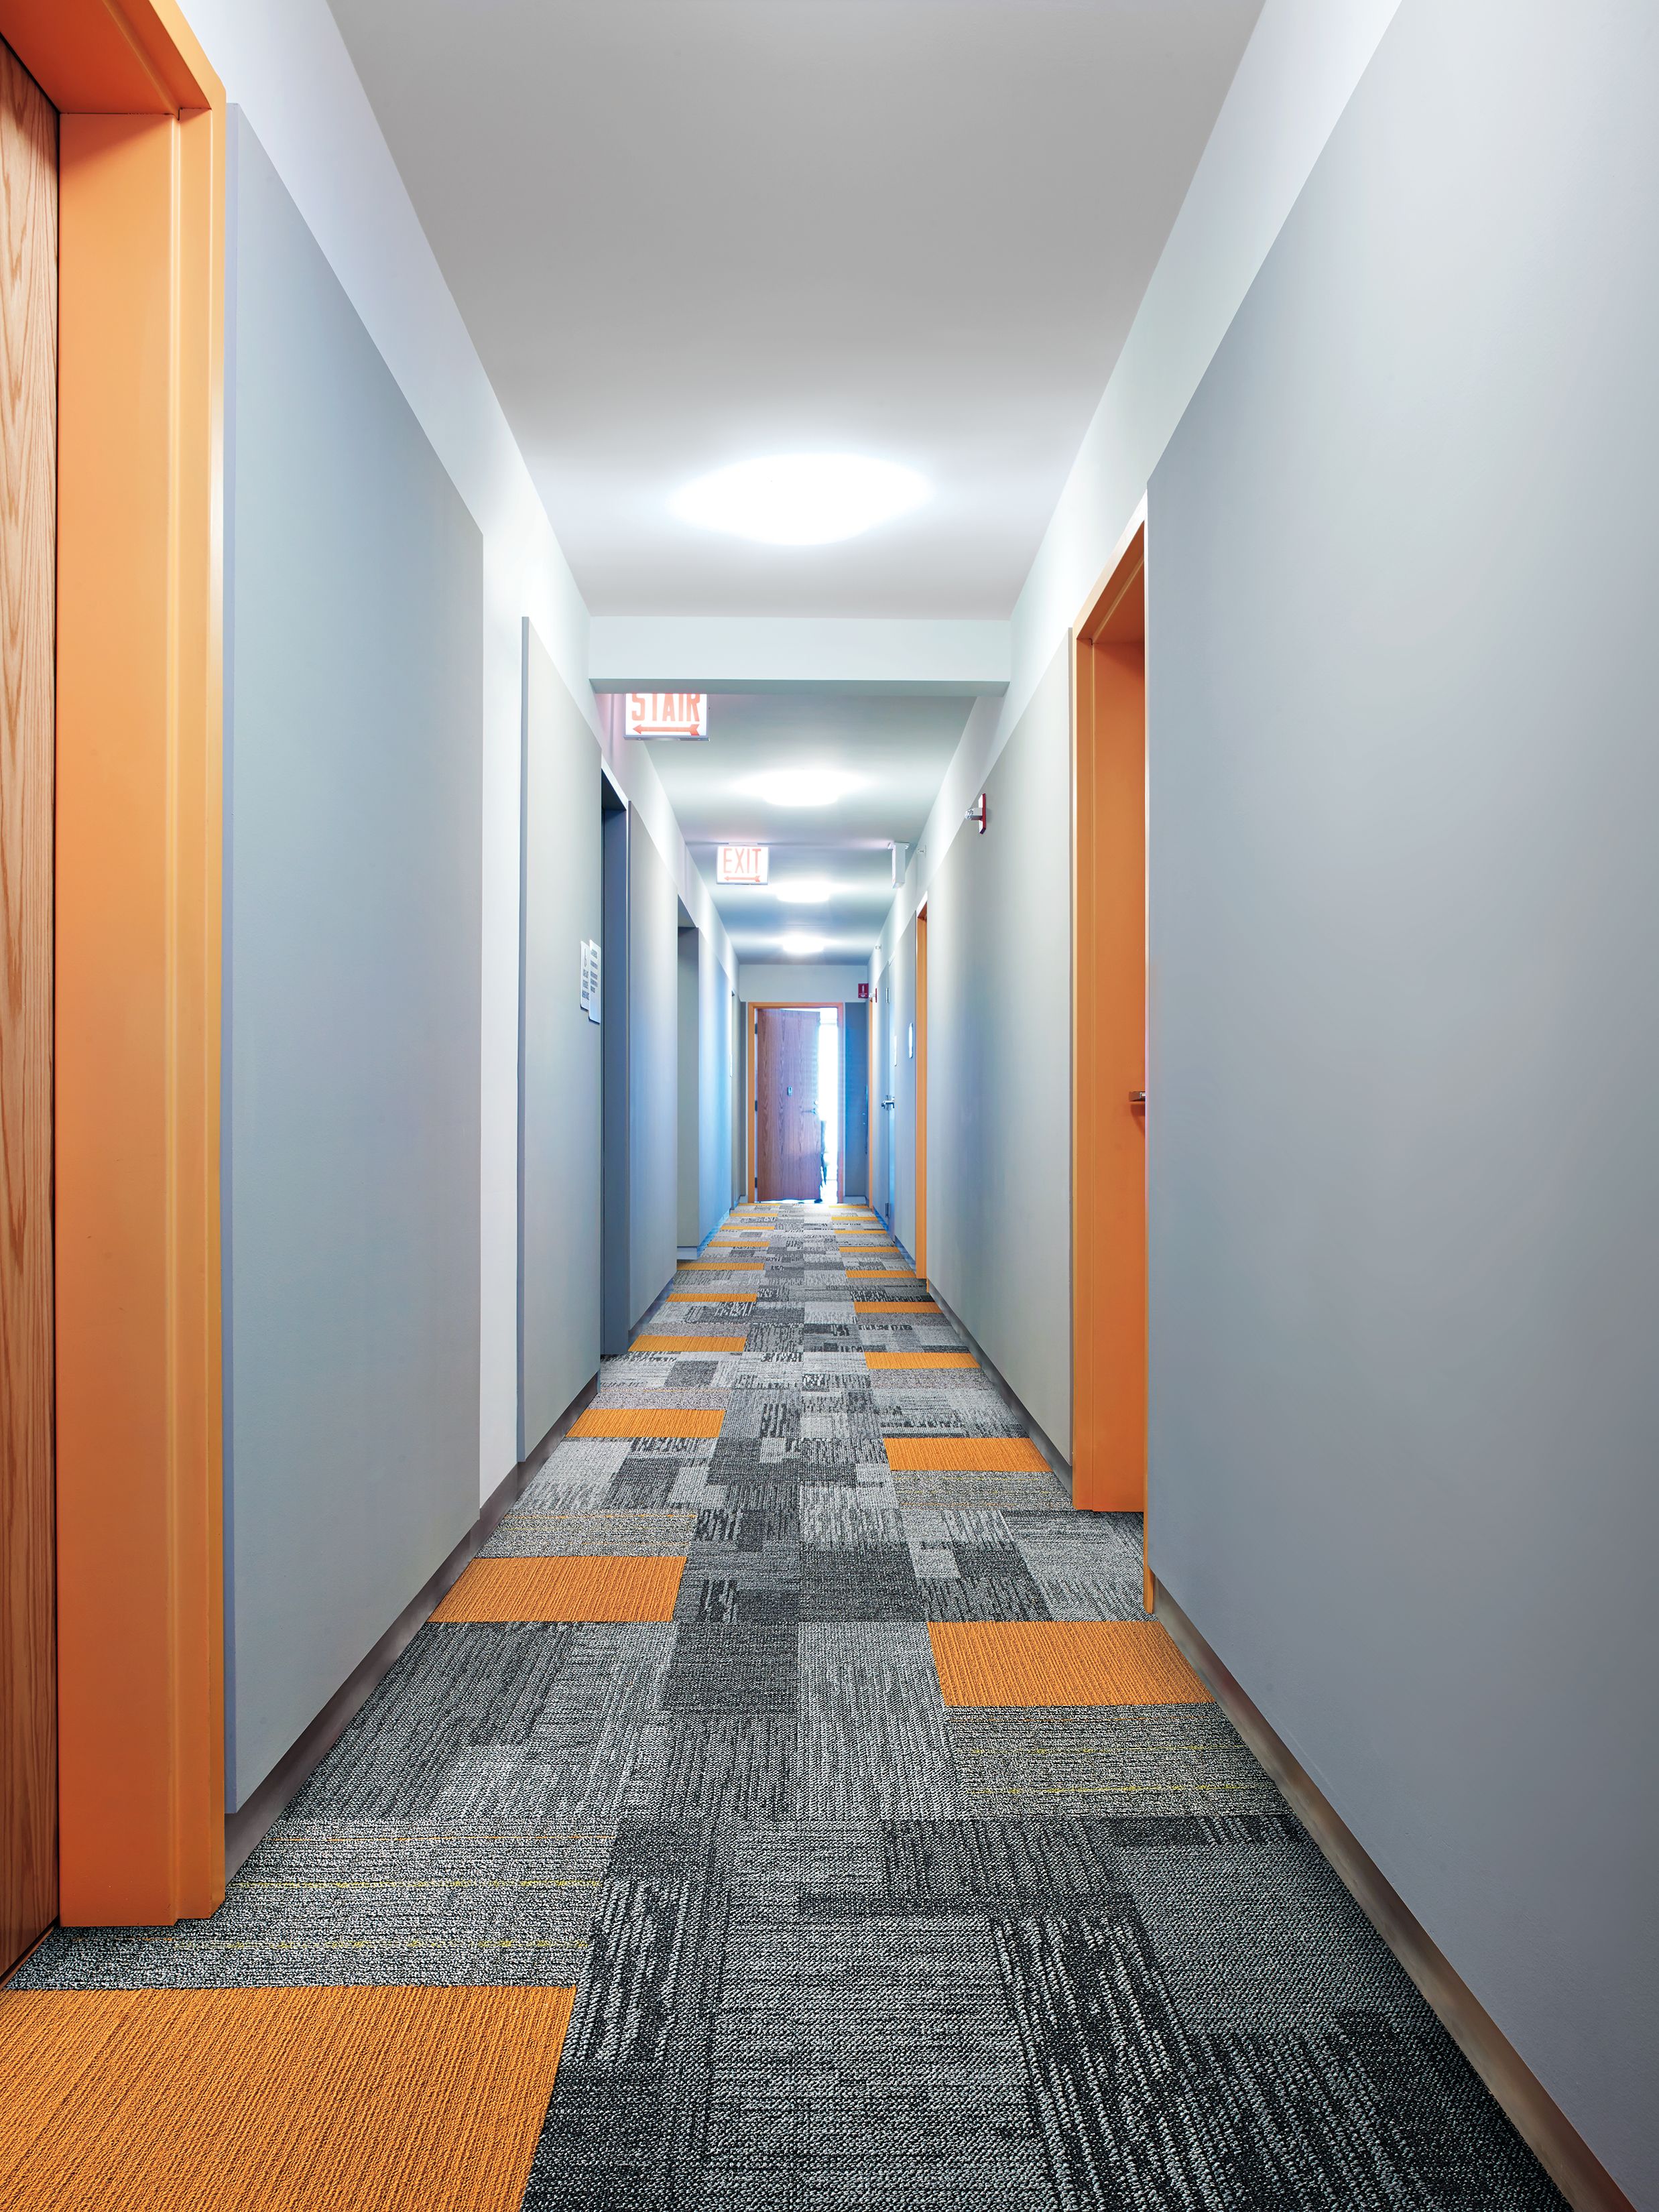 Interface Sidetrack carpet tile in a hallway imagen número 12